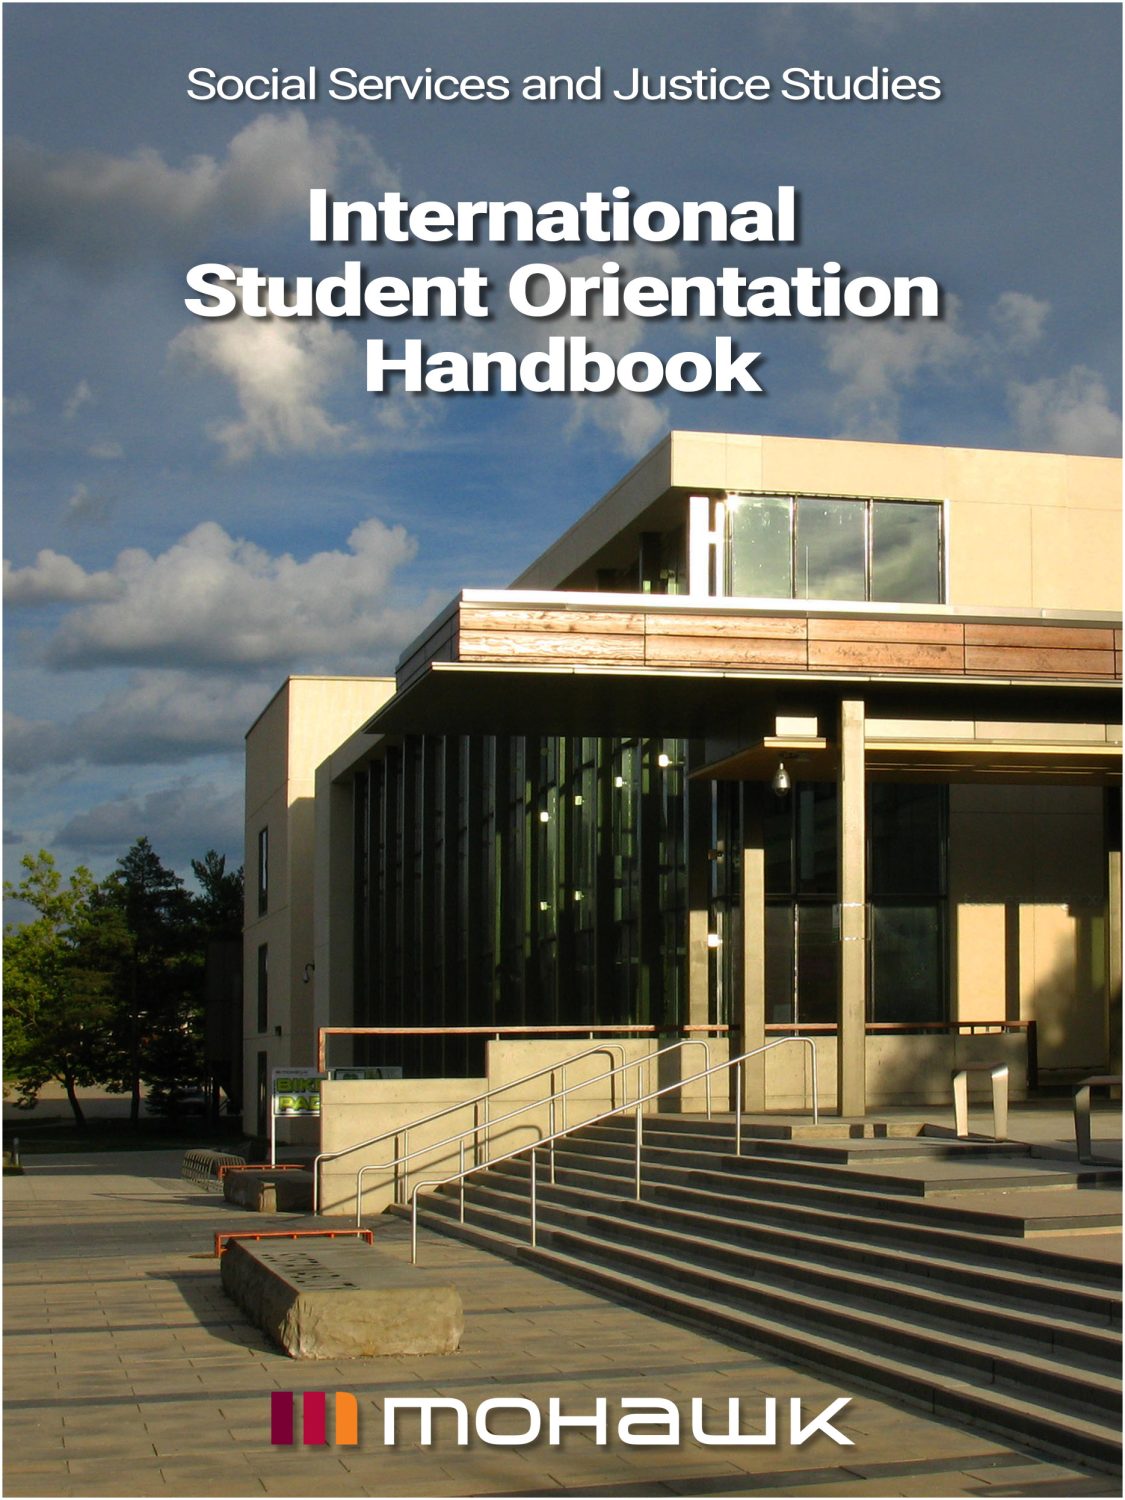 Cover image for SSJS International Student Orientation